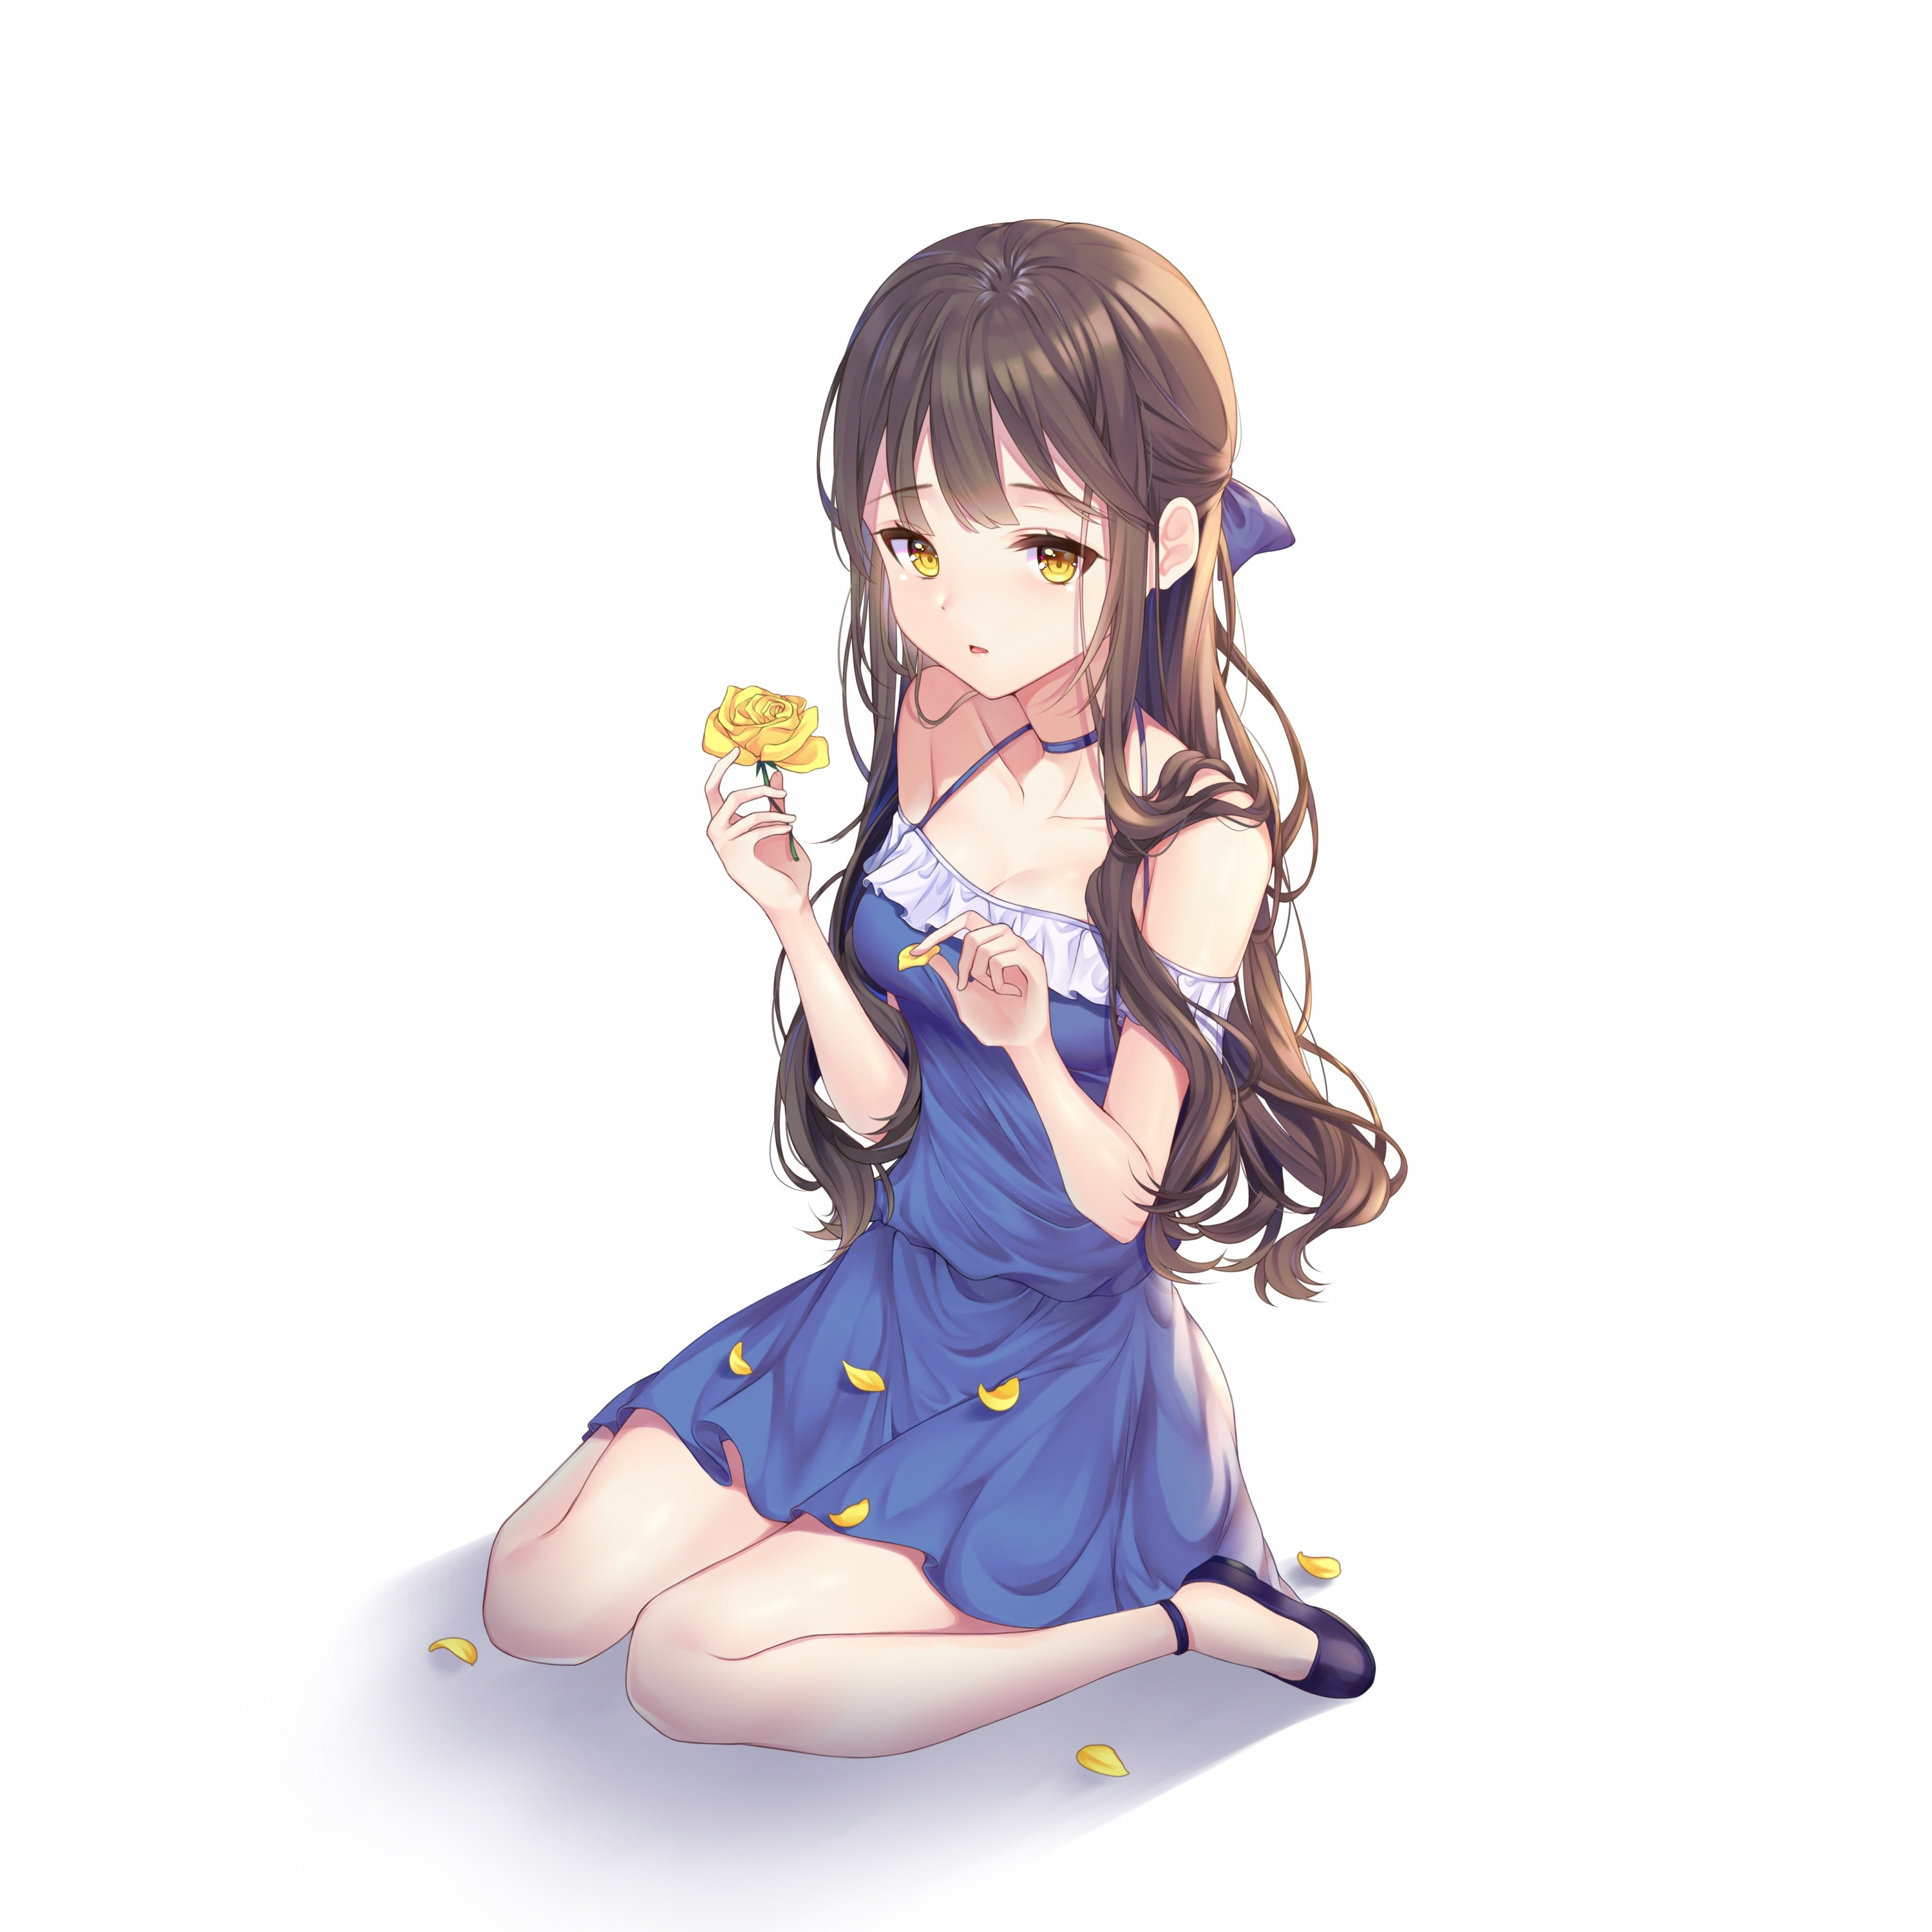 Download 2932x2932 Wallpaper Yellow Flower Cute Original Anime